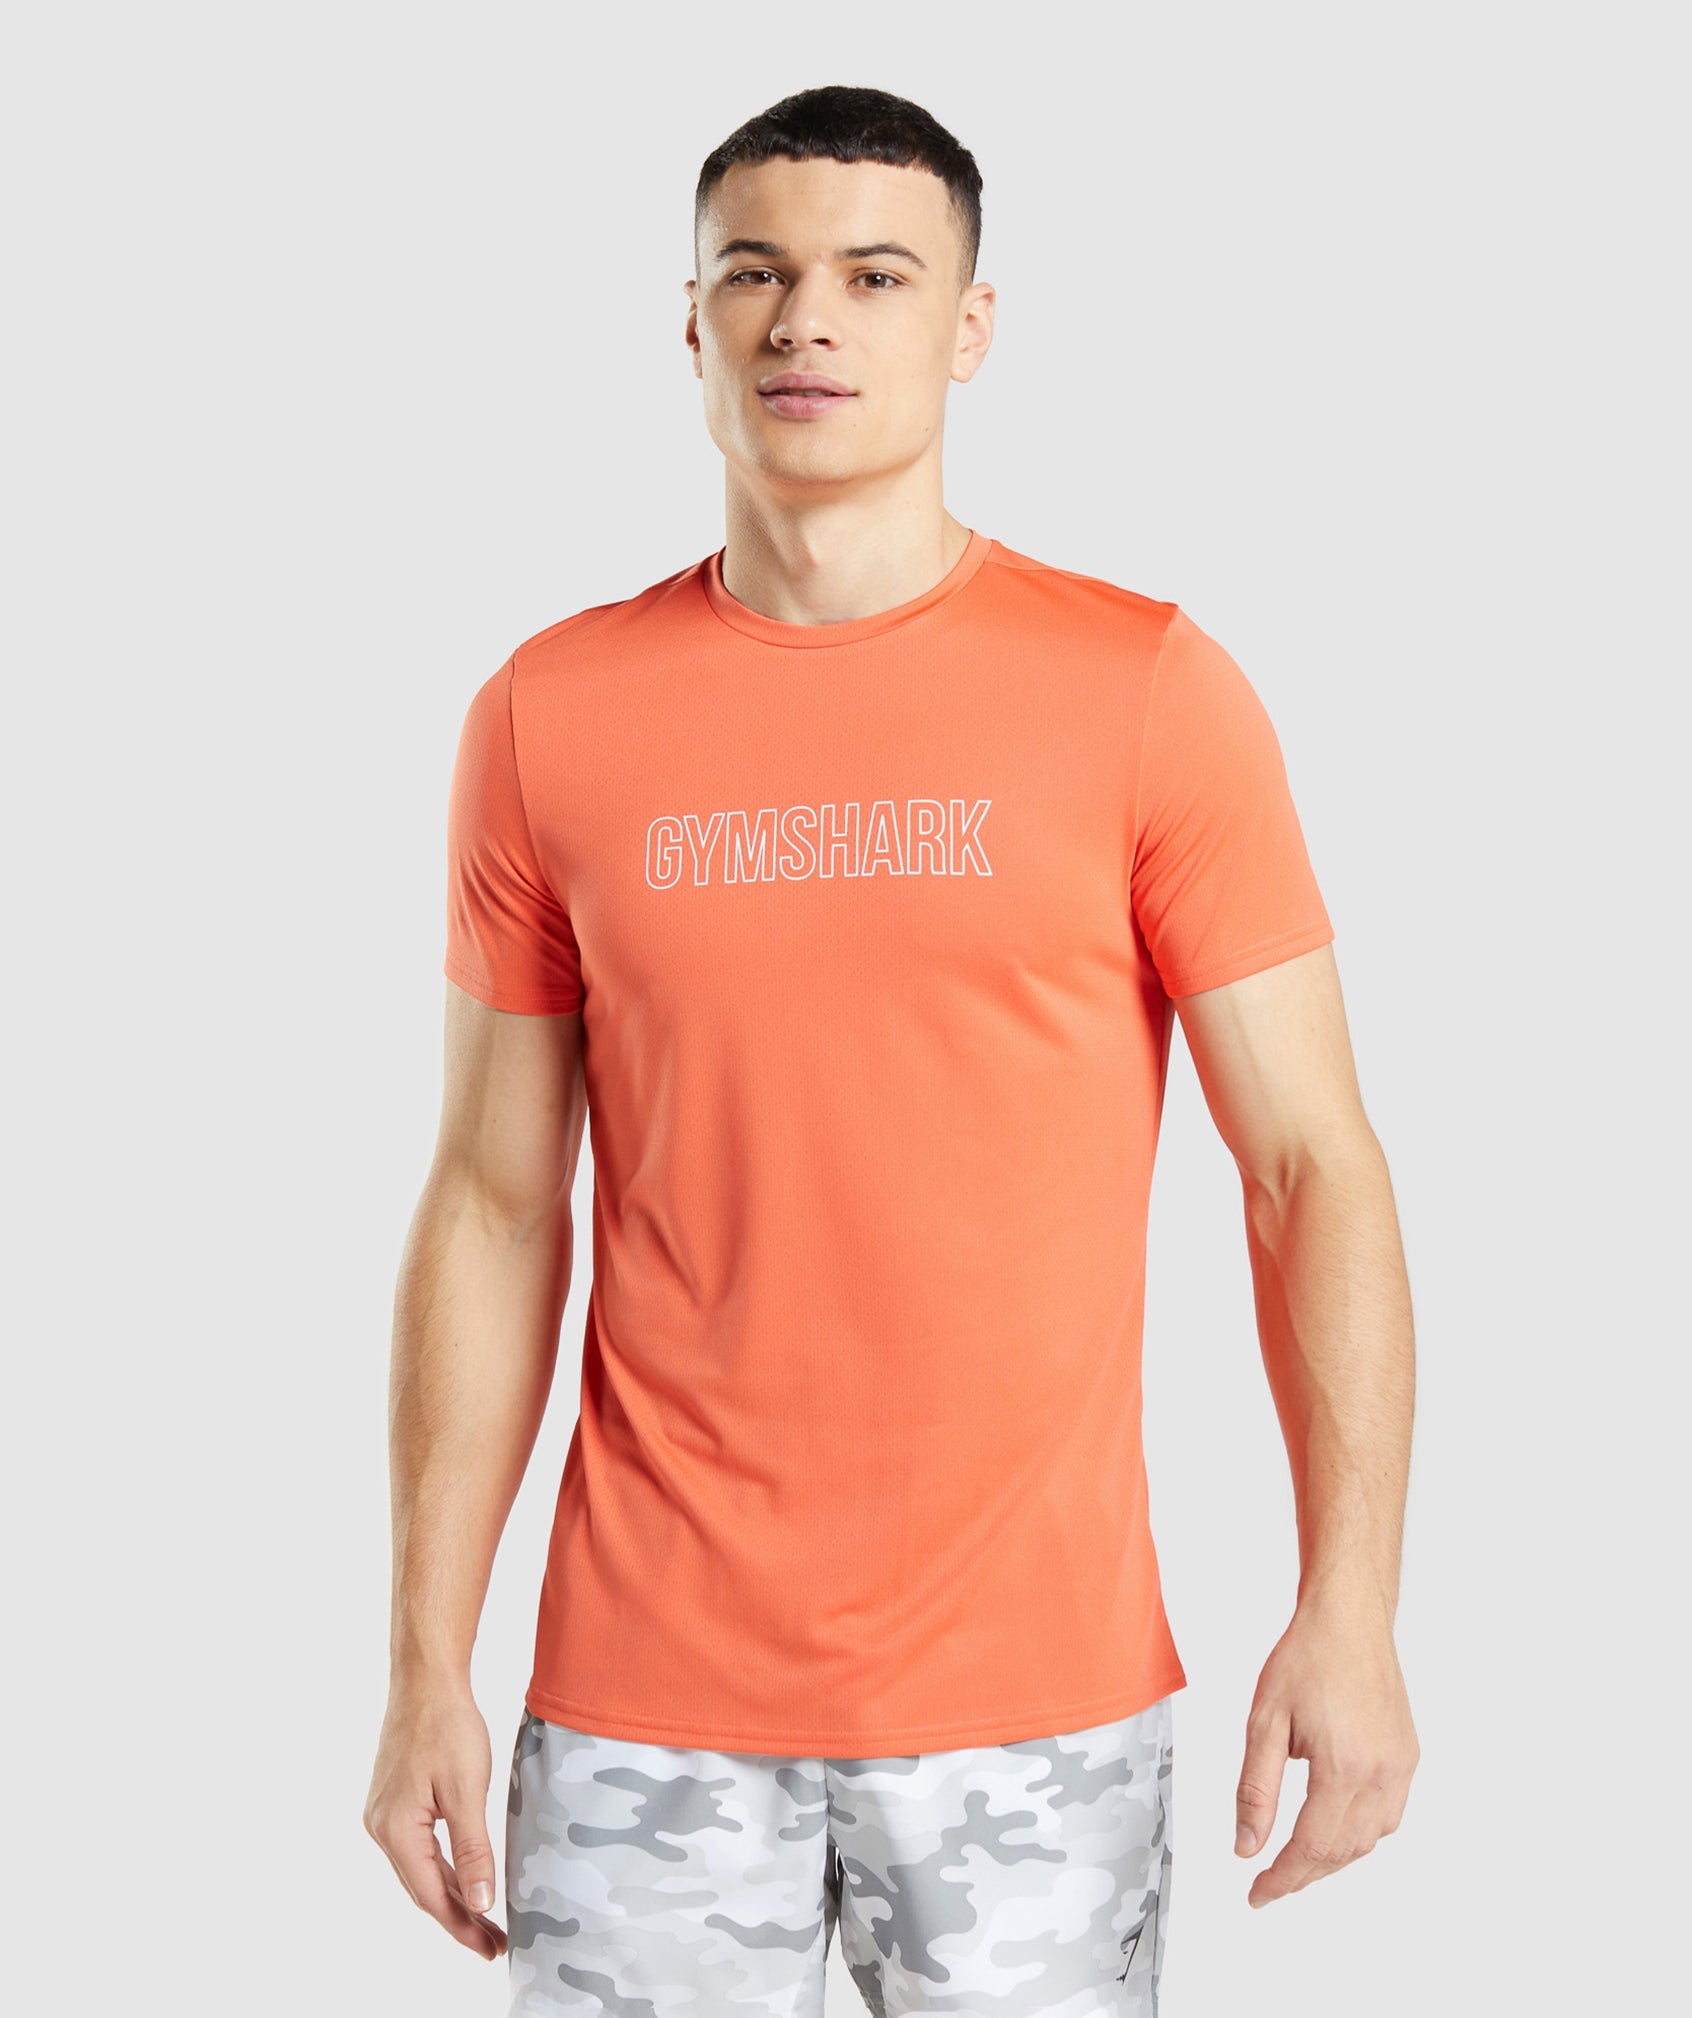 Arrival Graphic T-Shirt in Papaya Orange